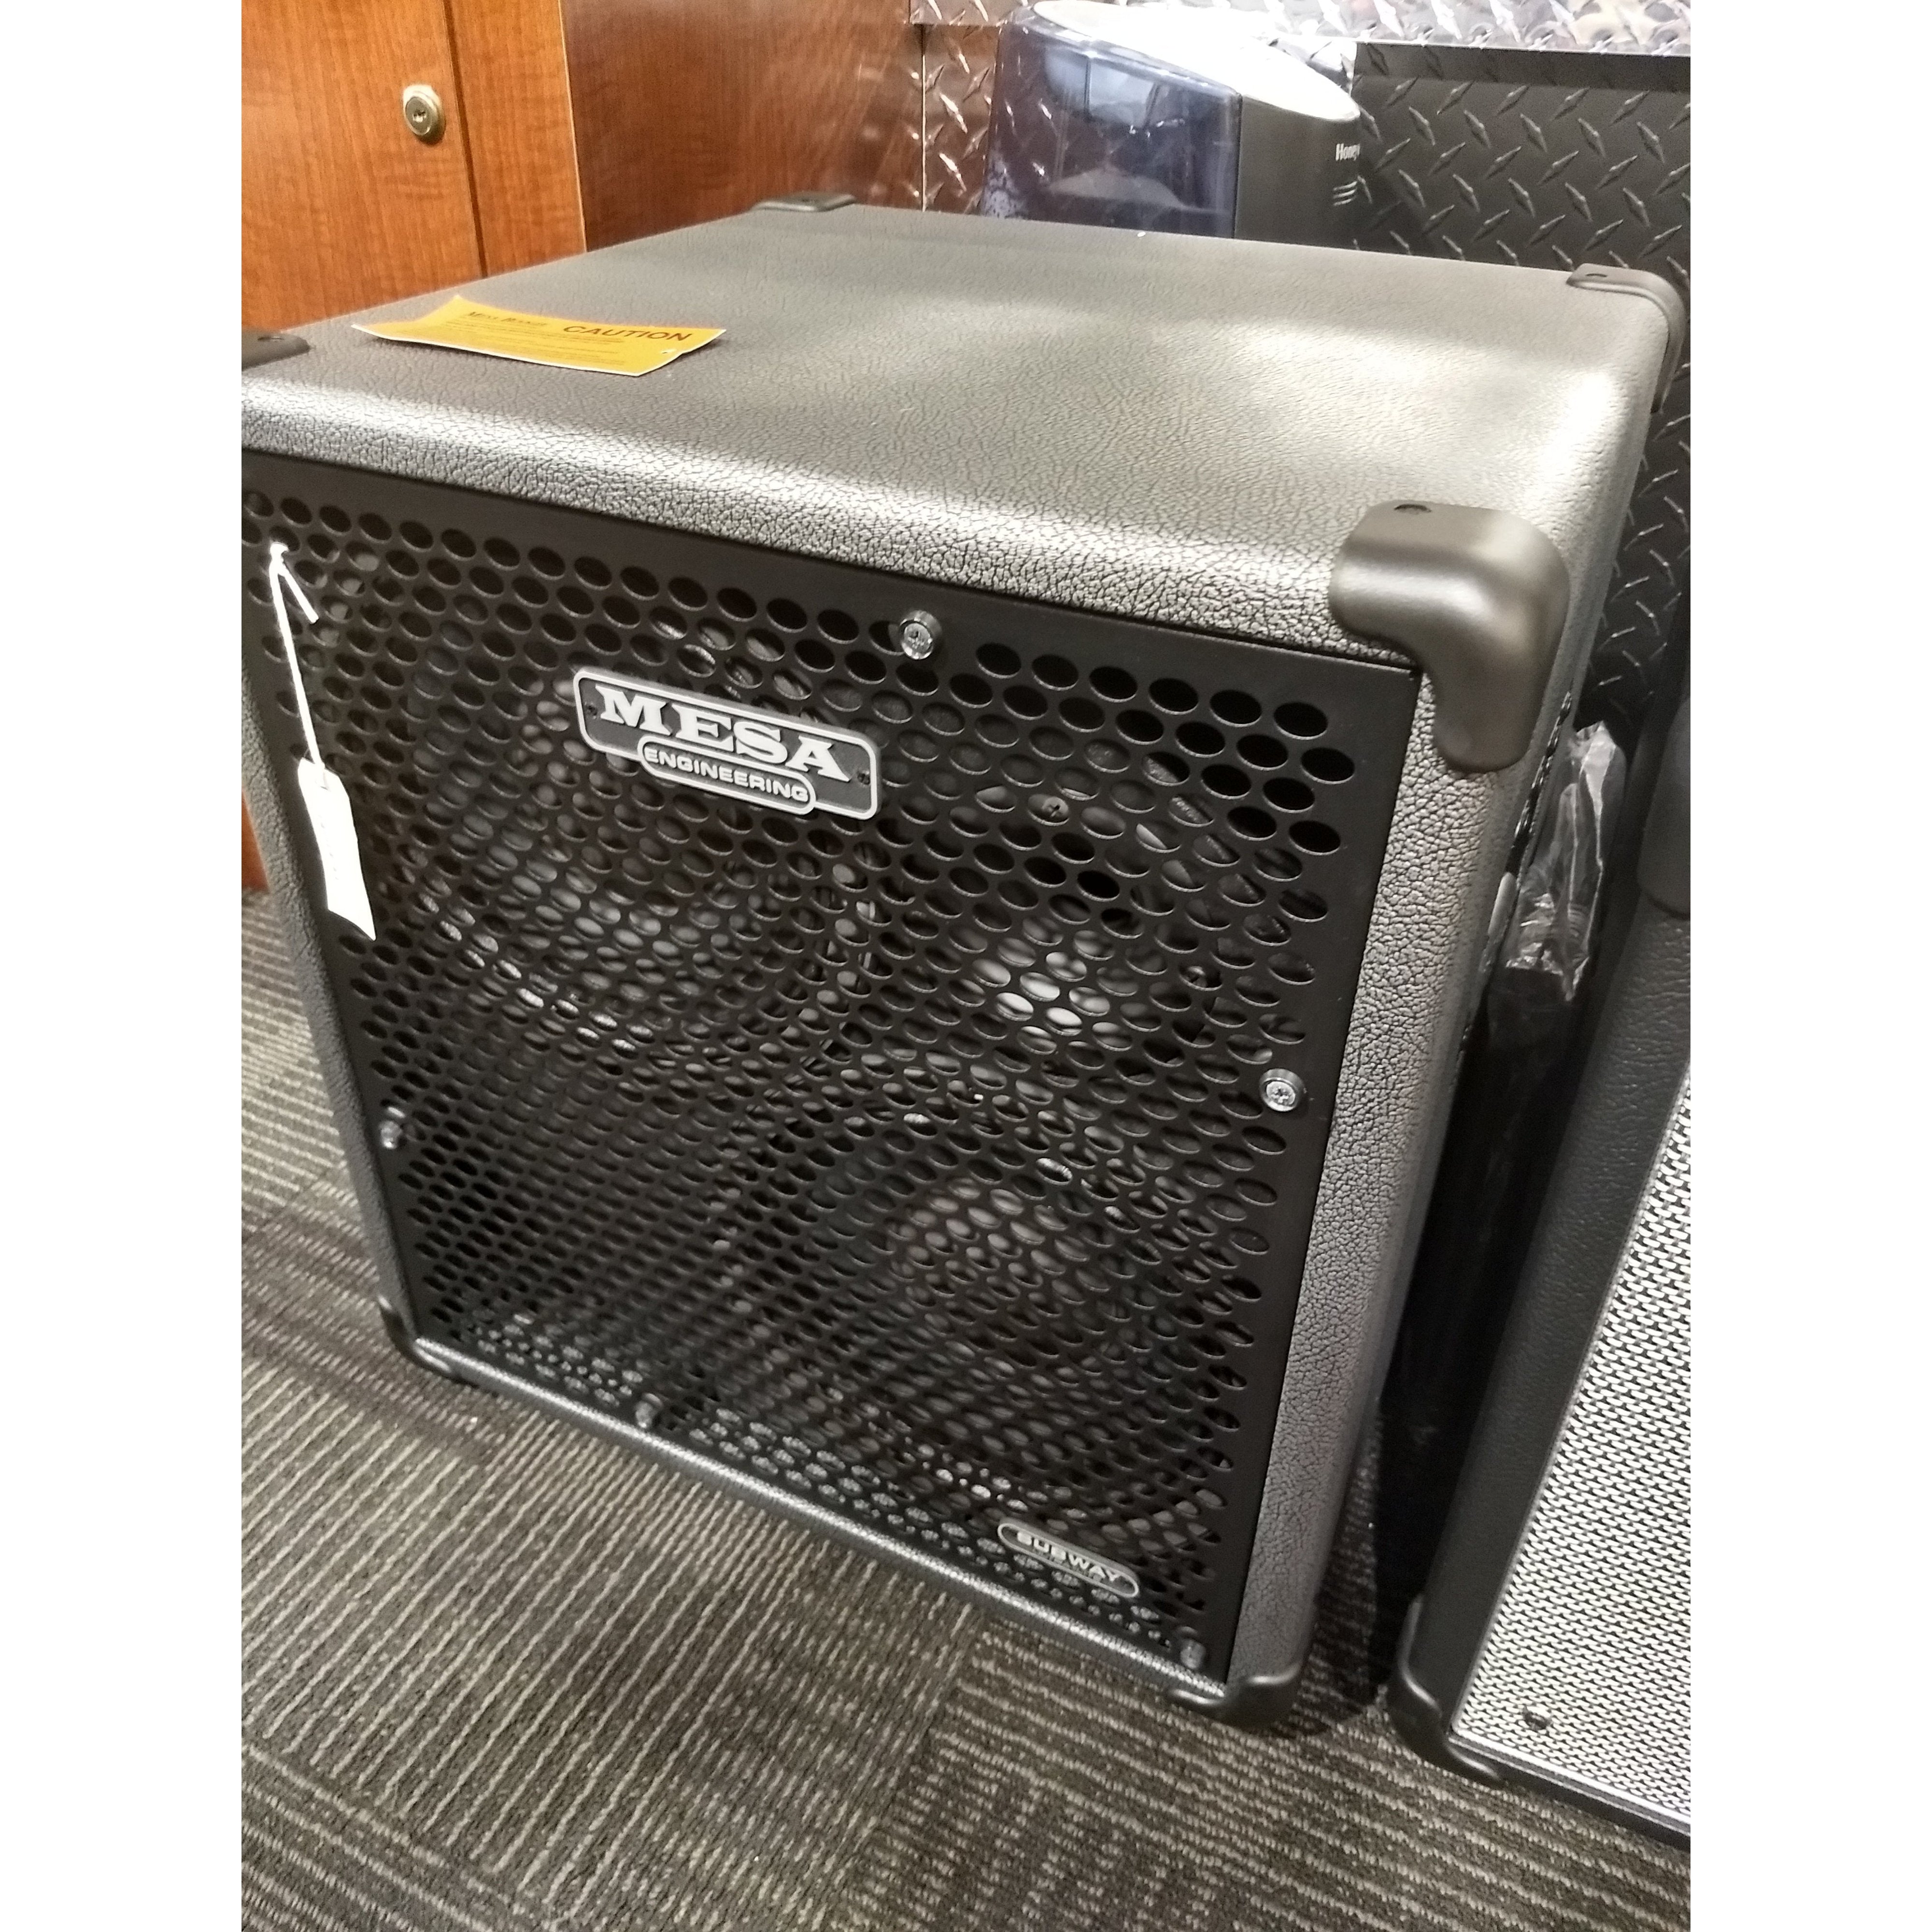 Mesa Boogie Custom Subway 2x10 Bass